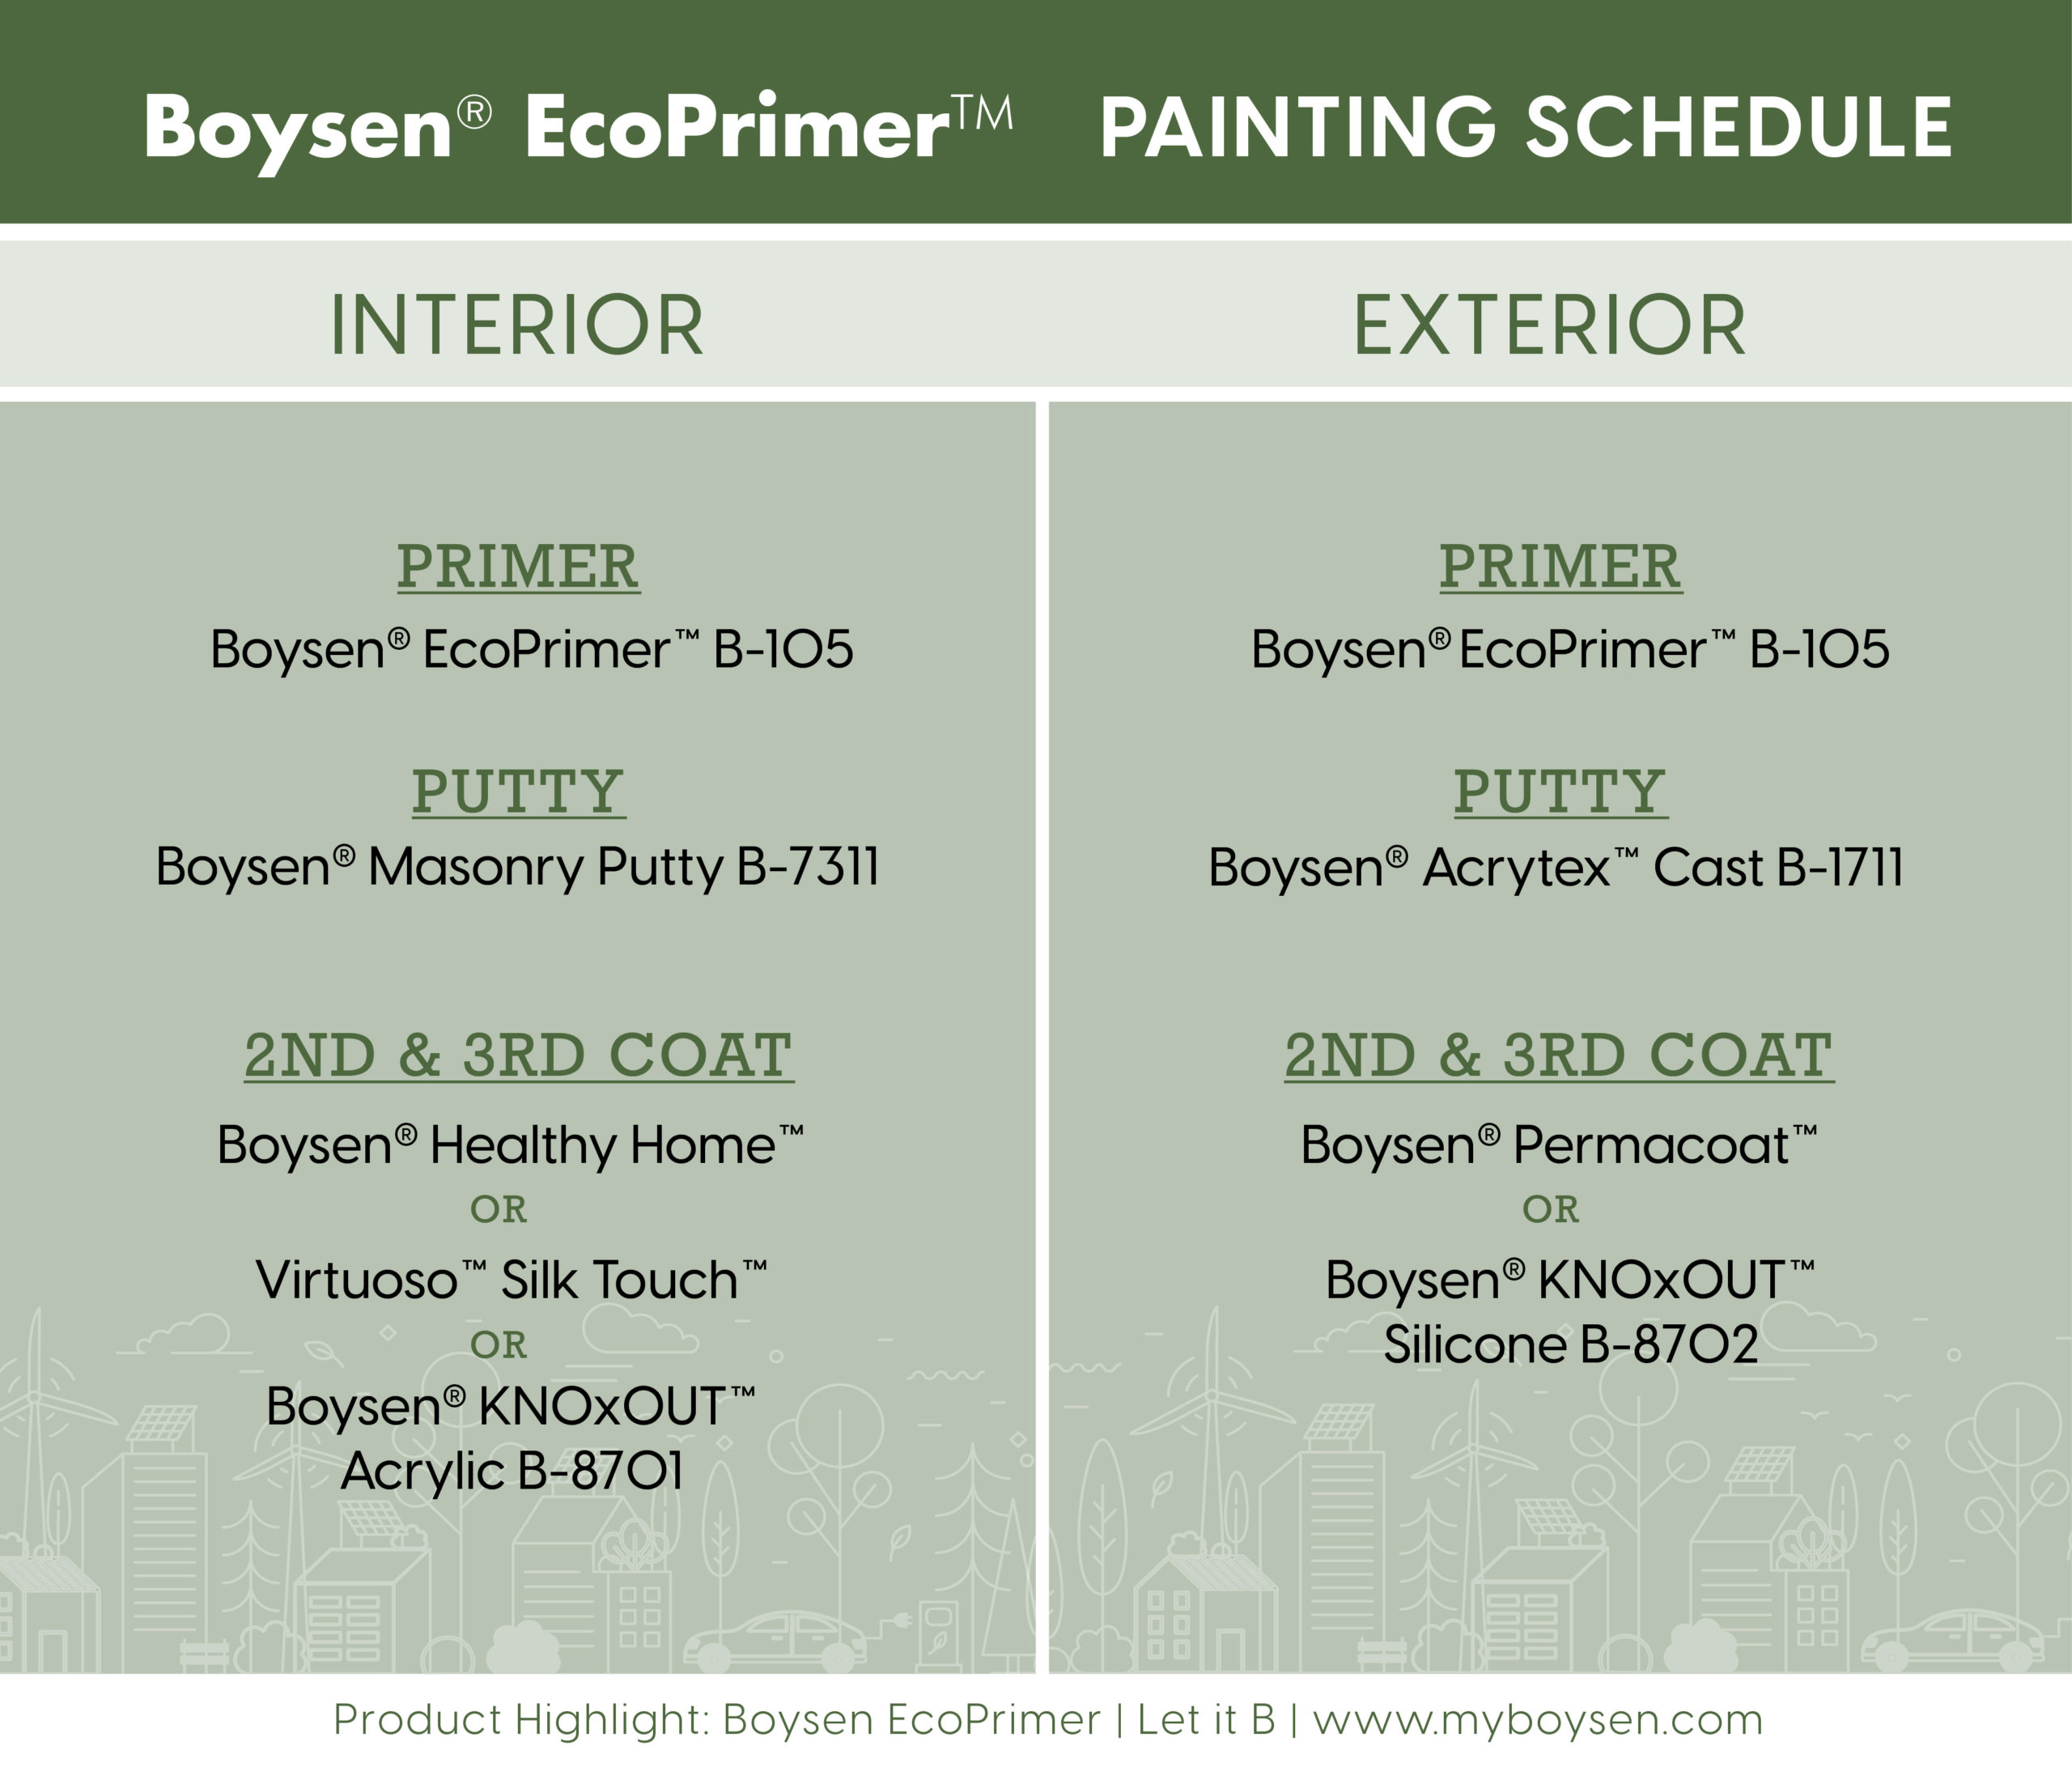 Product Highlight: Boysen EcoPrimer | MyBoysen